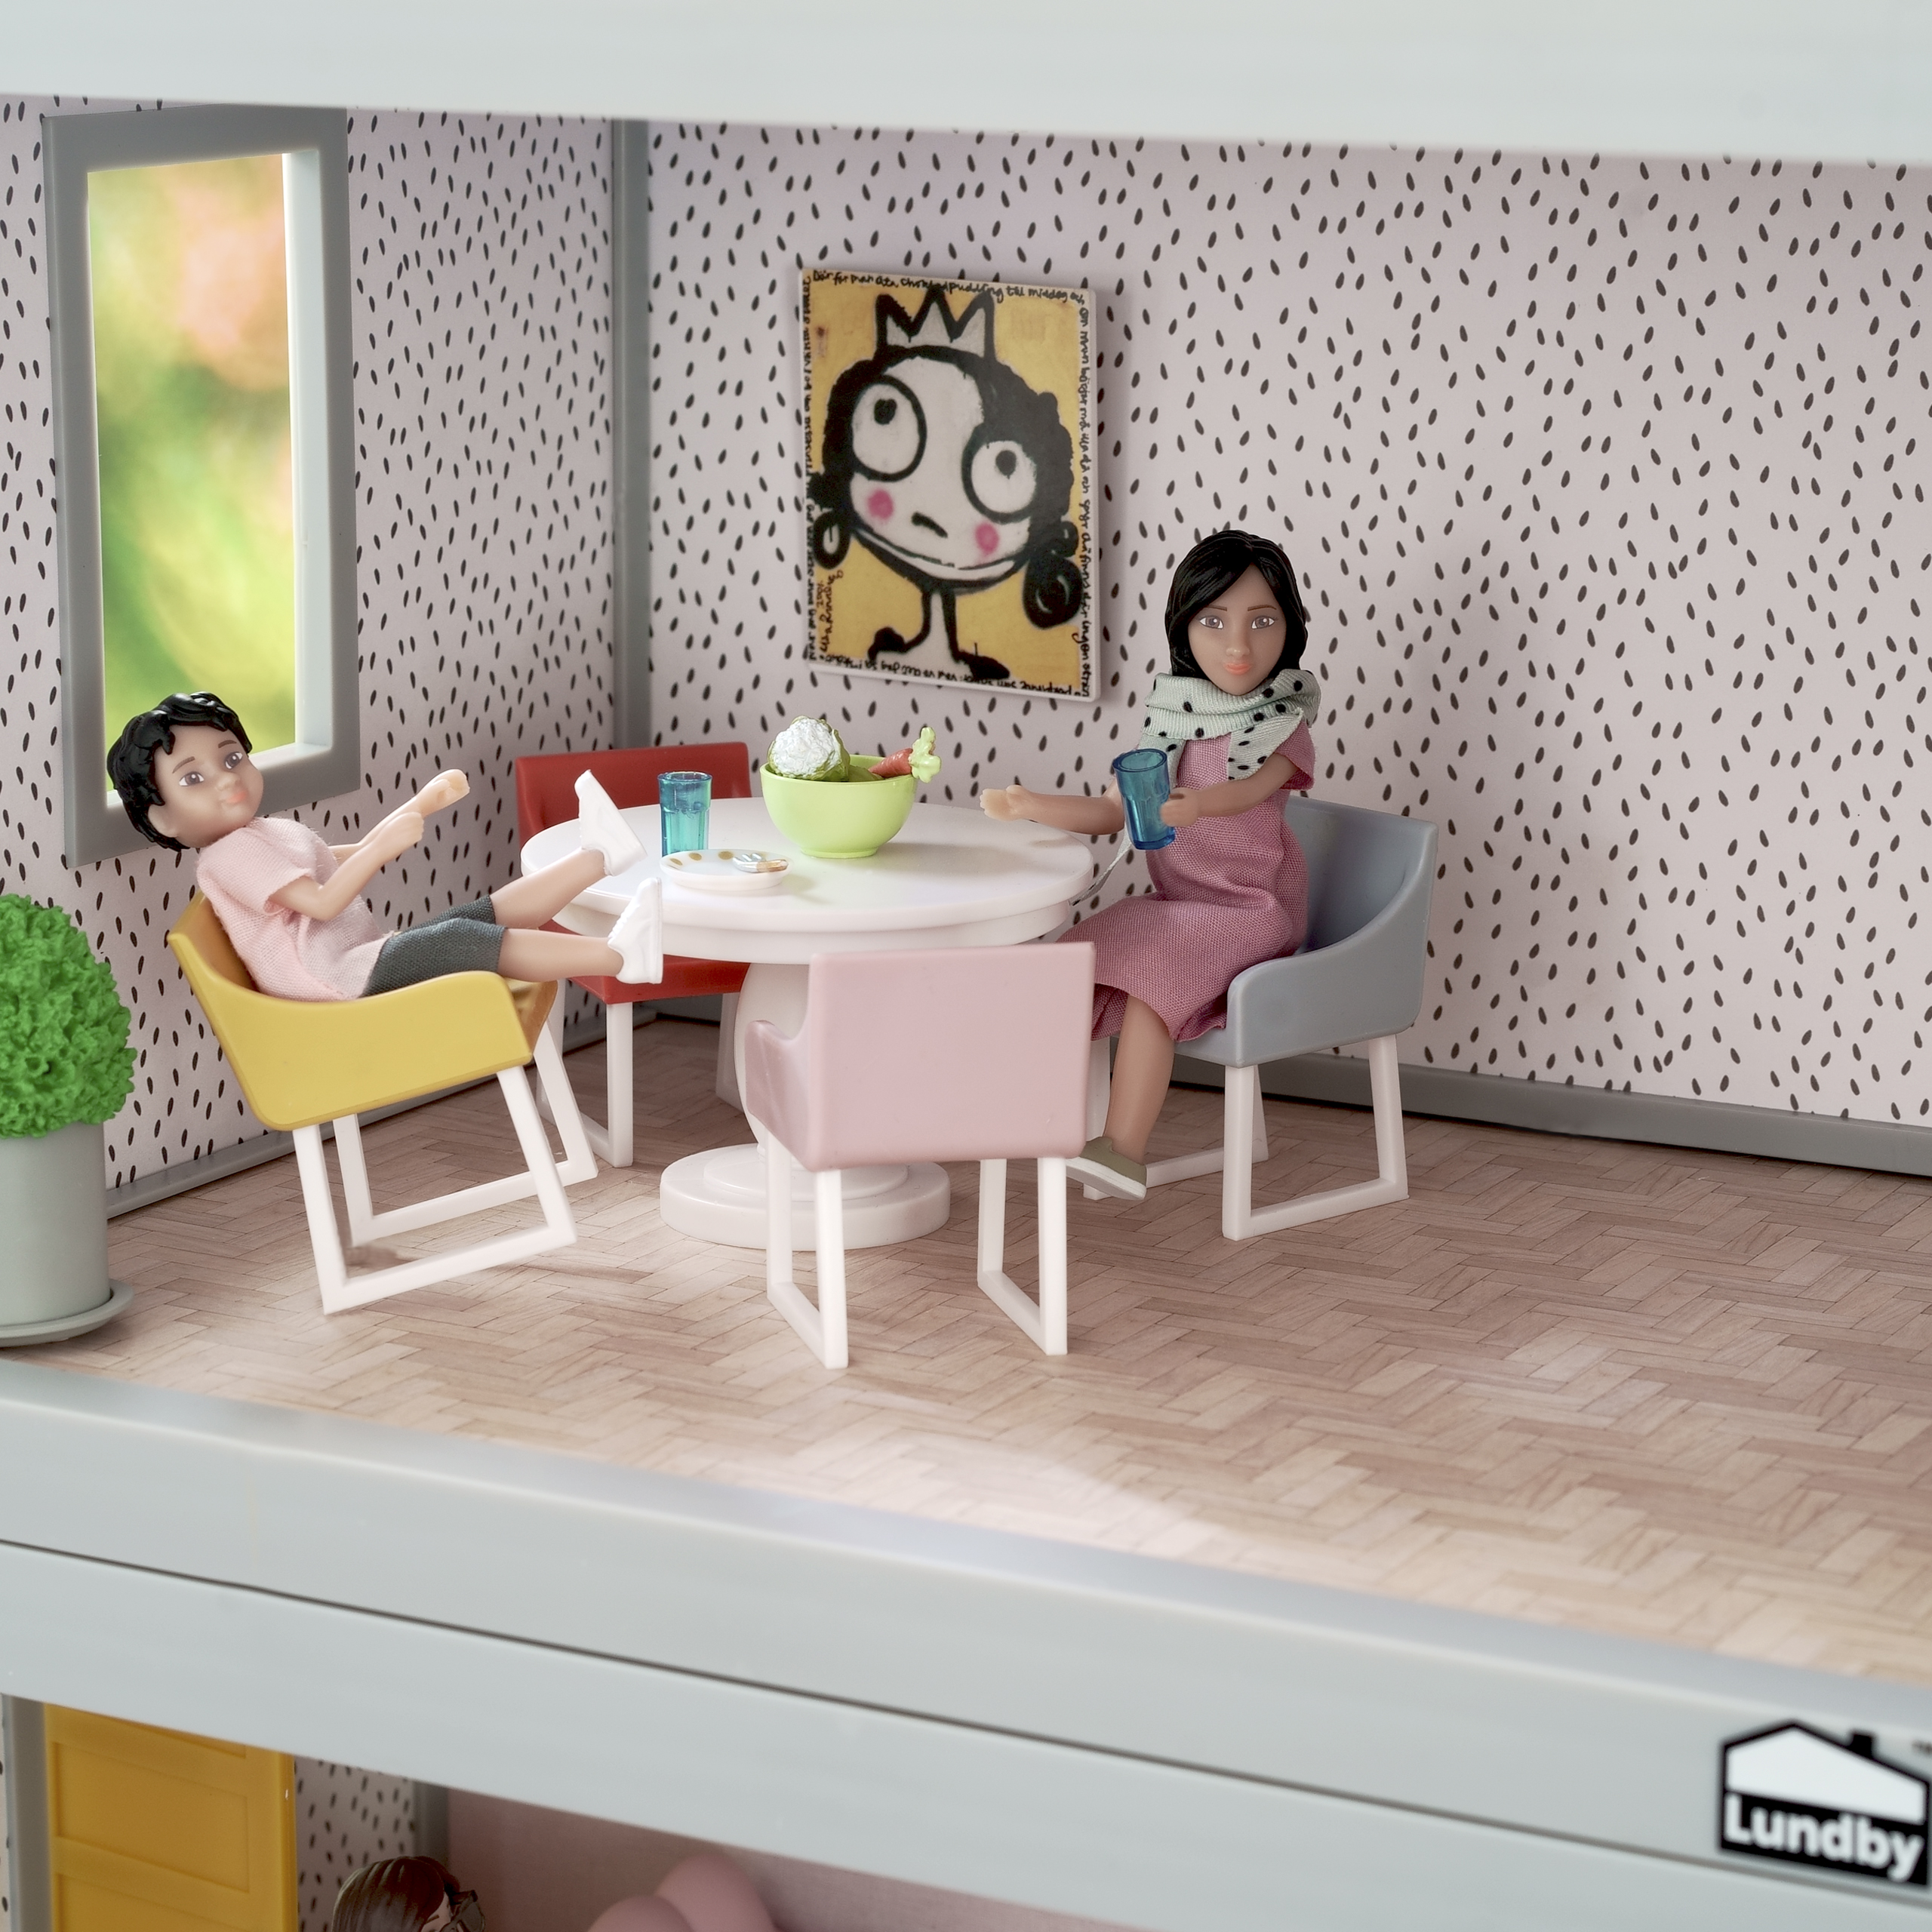 Lundby lundby dollhouse furniture dining table basic